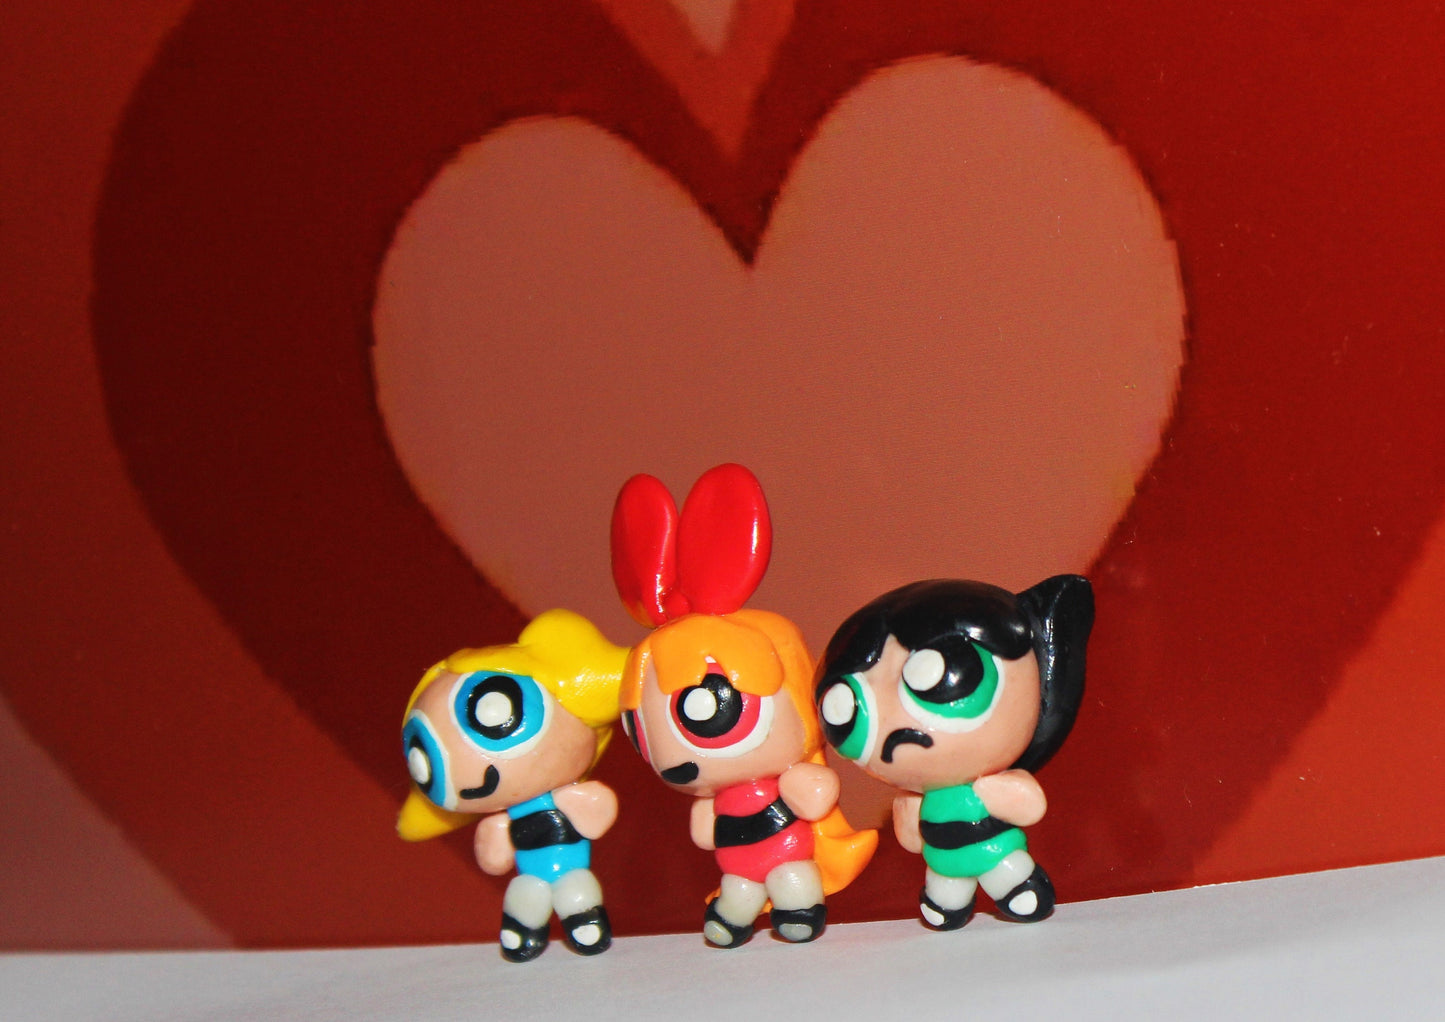 Powerpuff Girls figures figurines dolls collectables miniatures